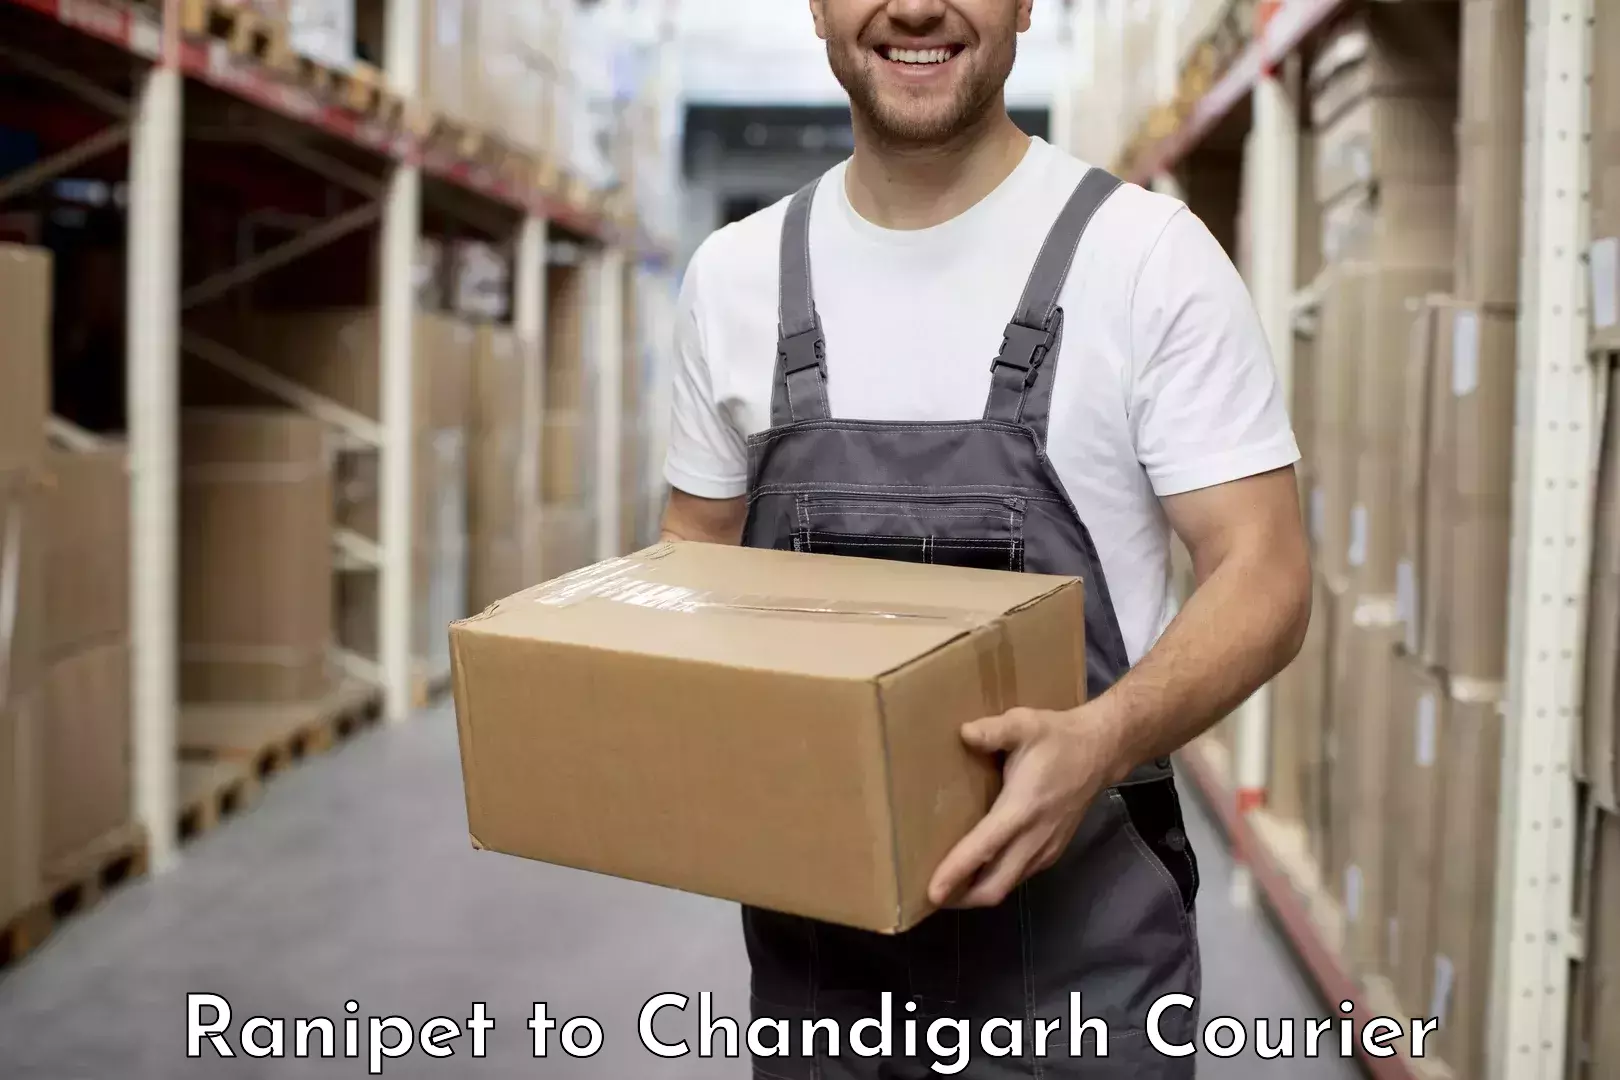 High-speed parcel service Ranipet to Chandigarh